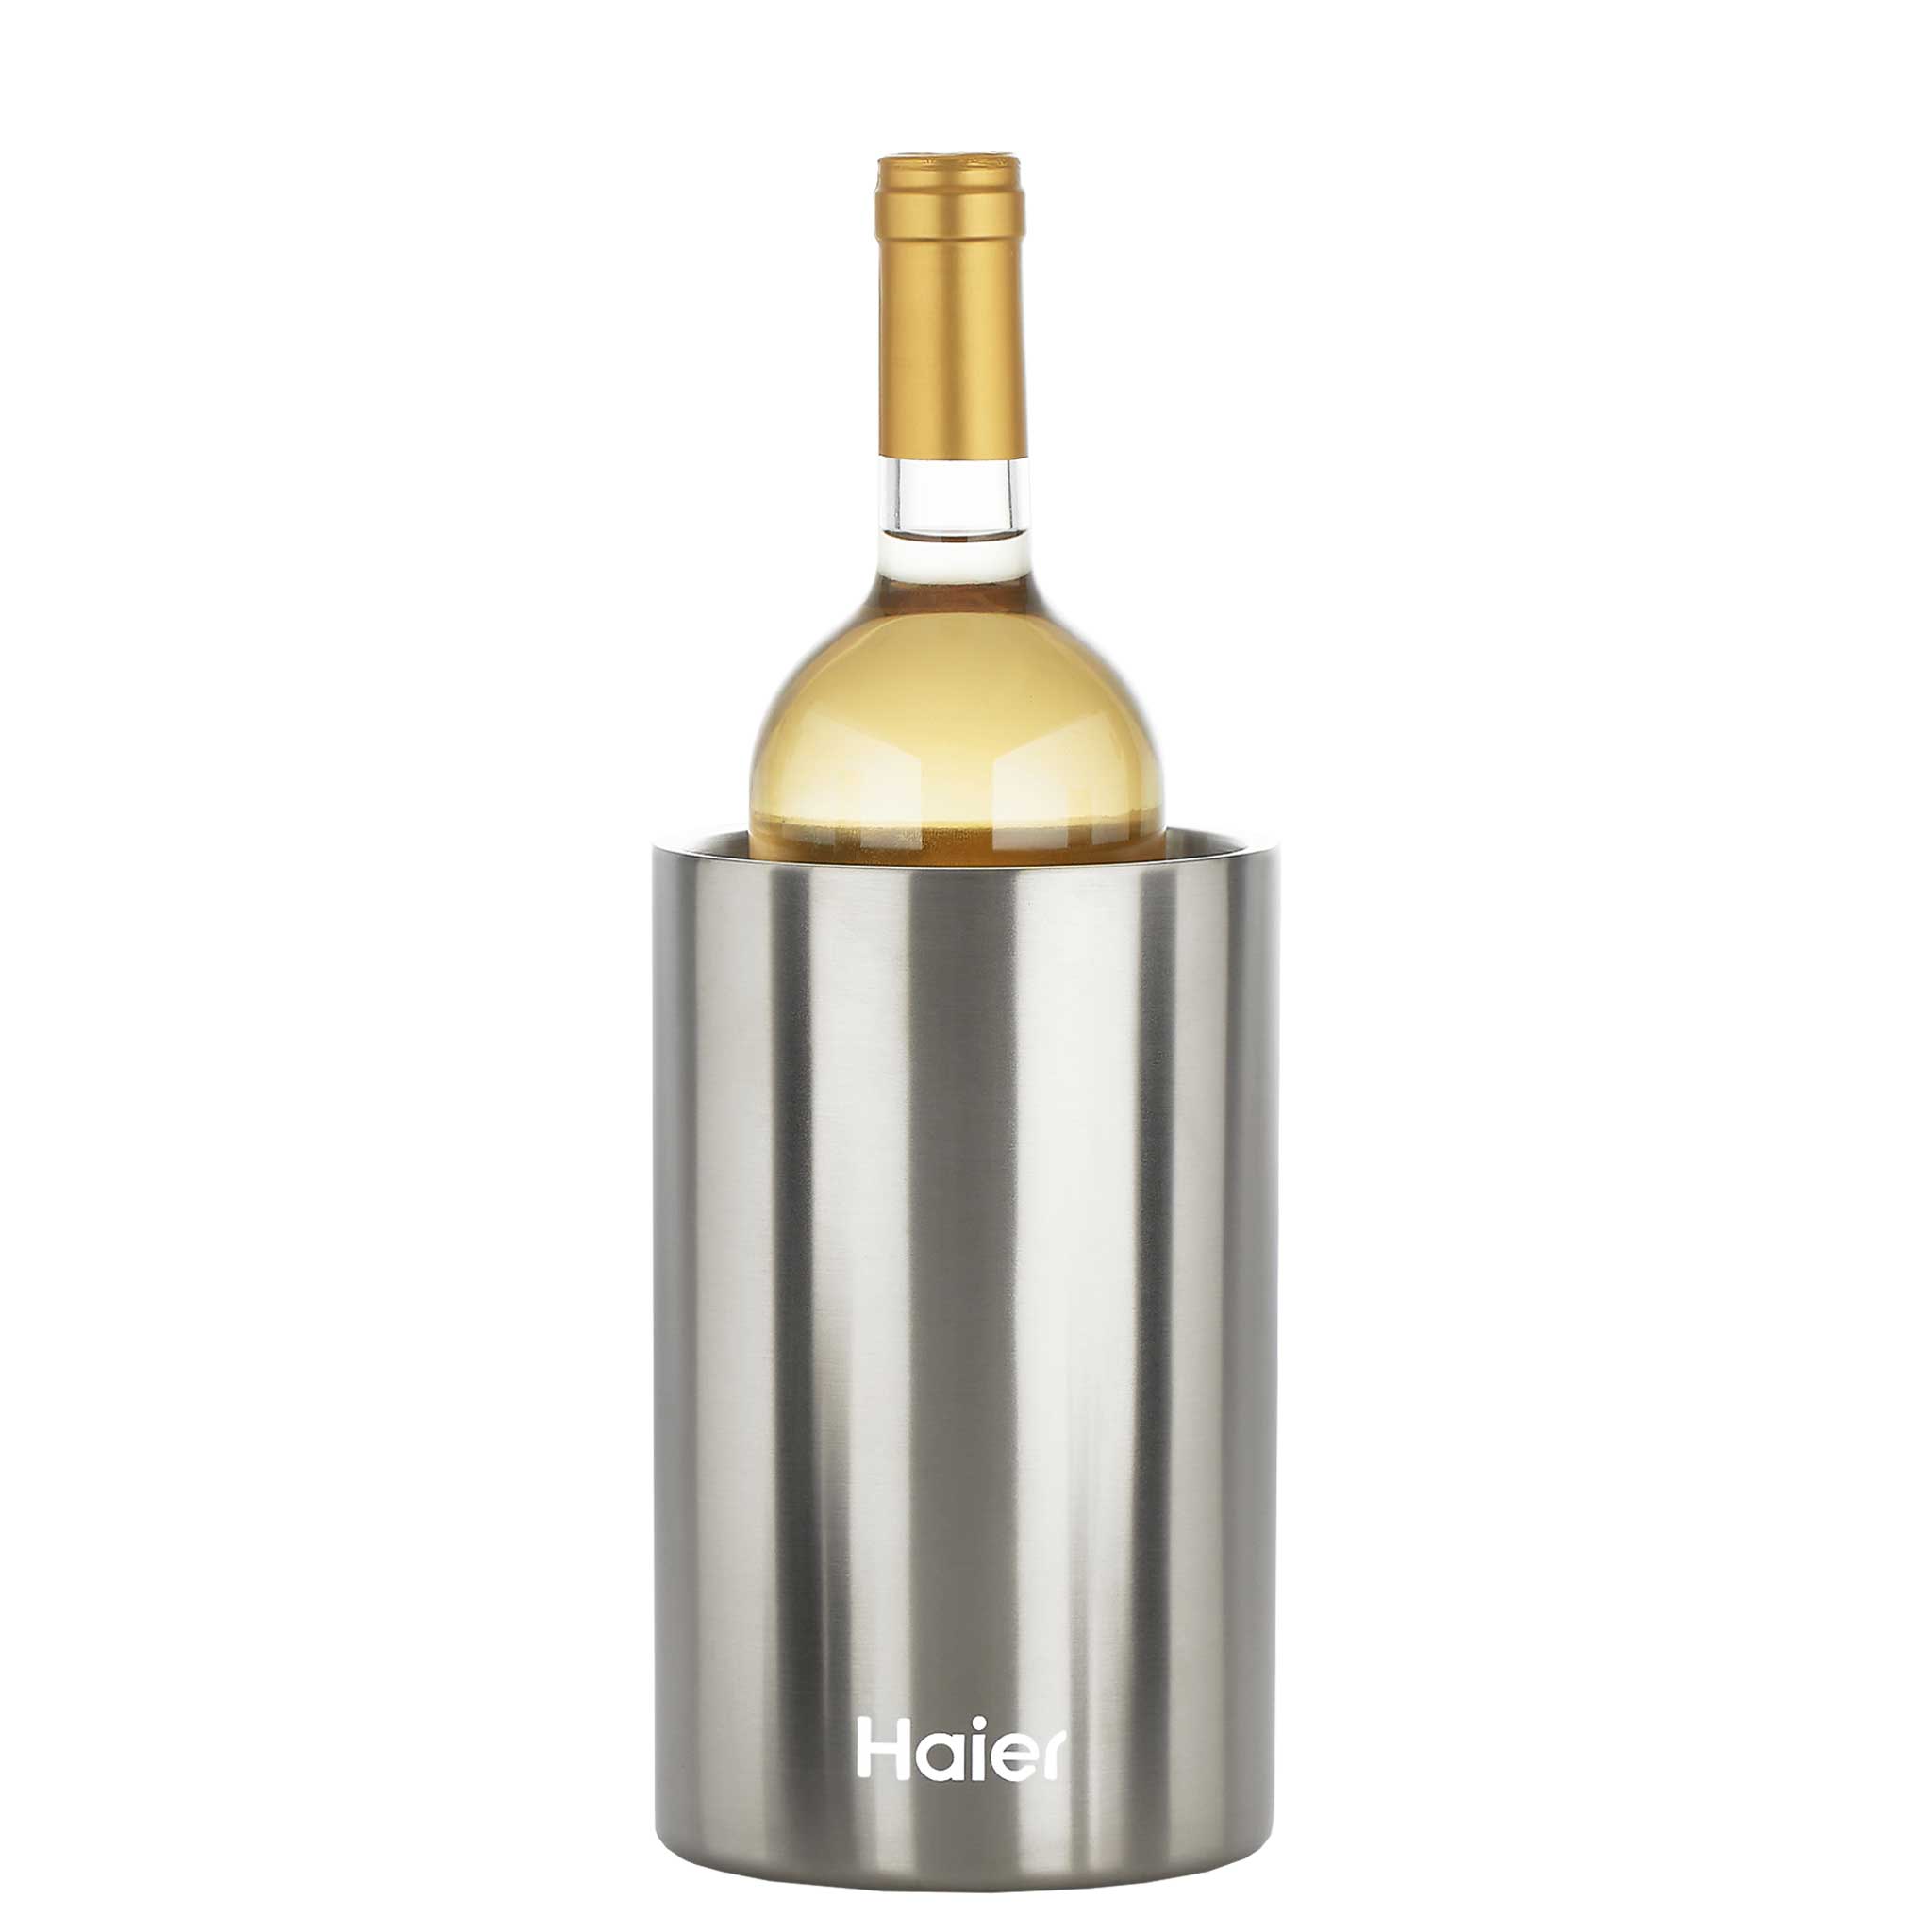 Haier Wine Cooler Bucket, Premium Quality, Stainless Steel